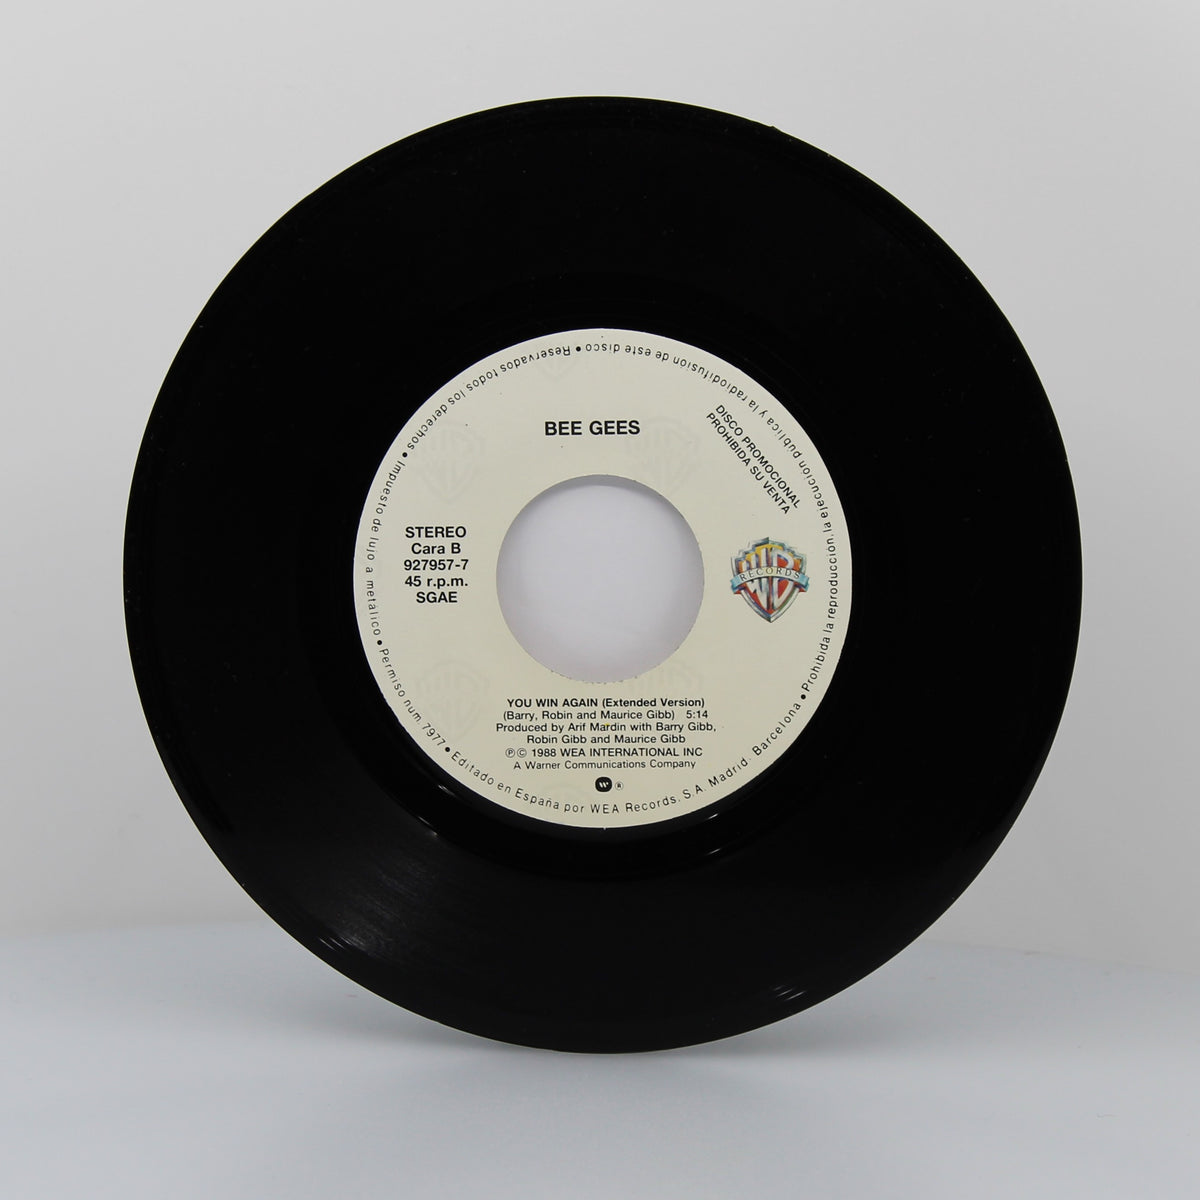 Bee Gees - Angela, Vinyl 7&quot; Single 45Rpm Promo, Spain 1987